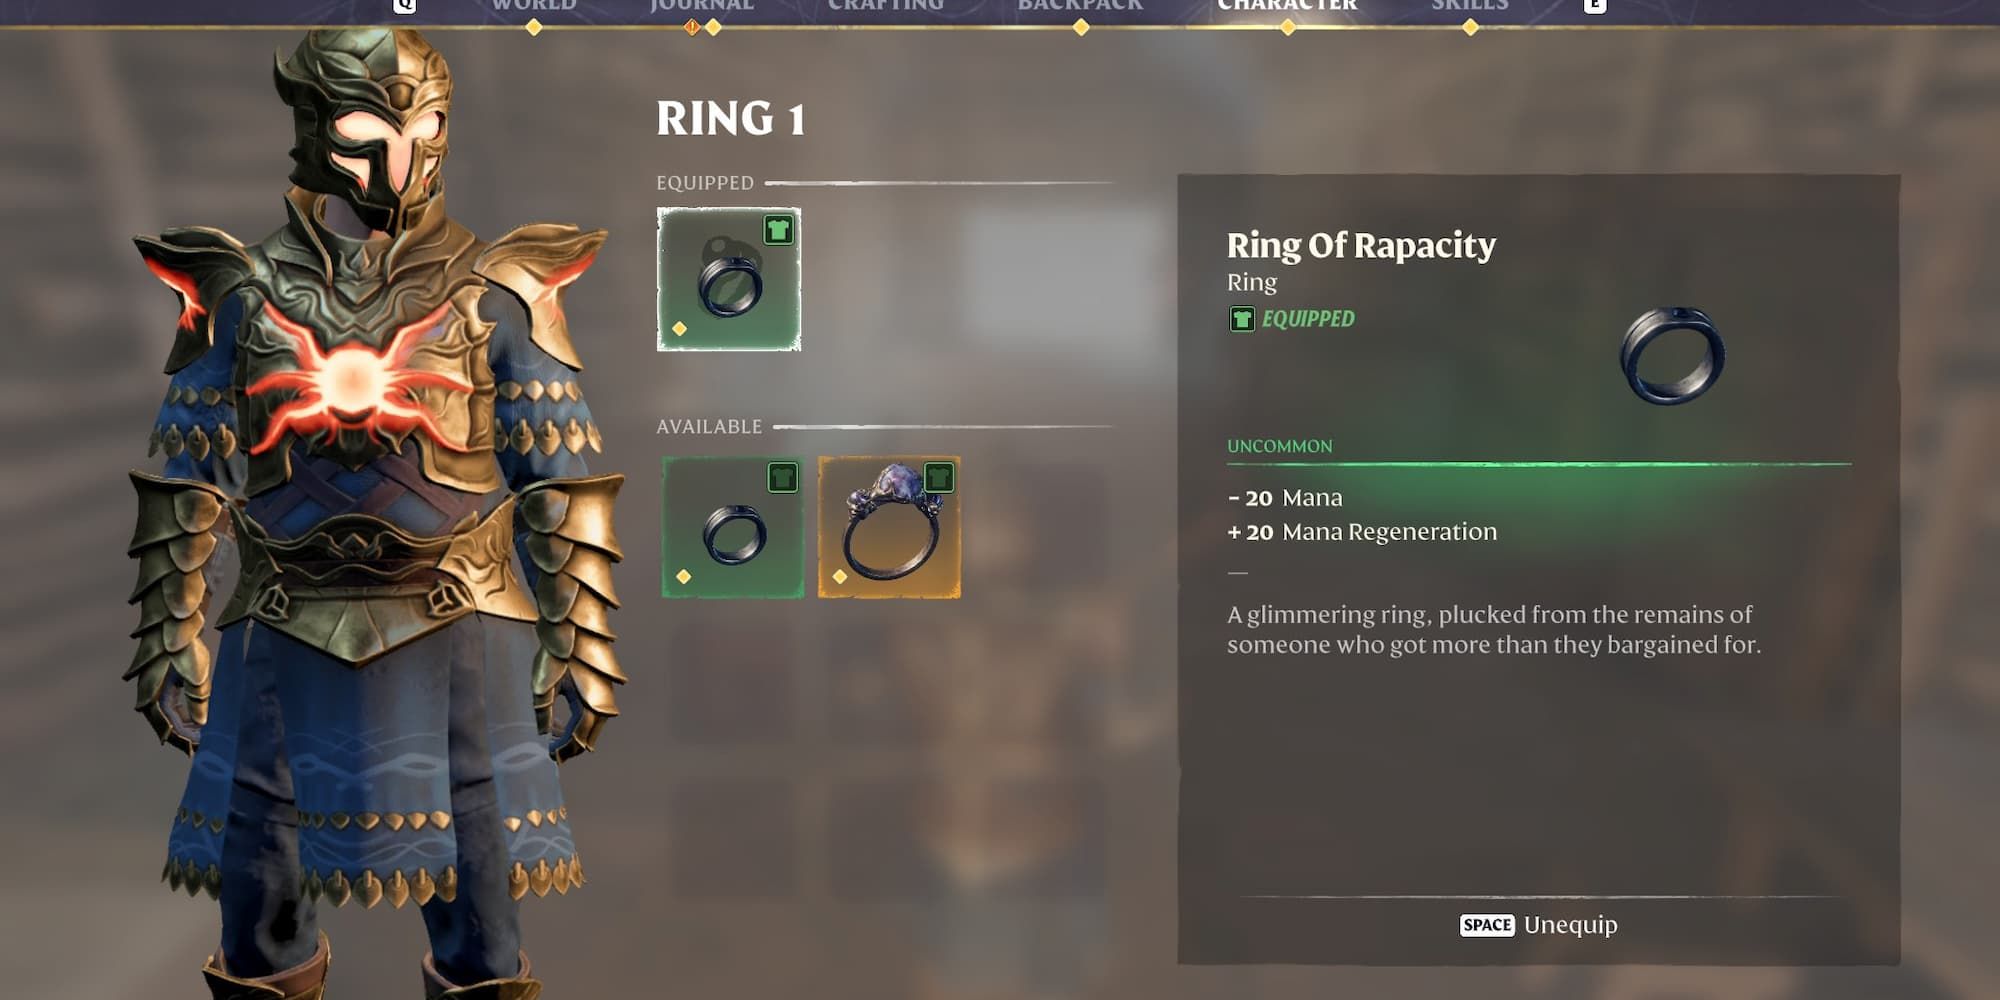 Ring of Rapacity item description in Enshrouded